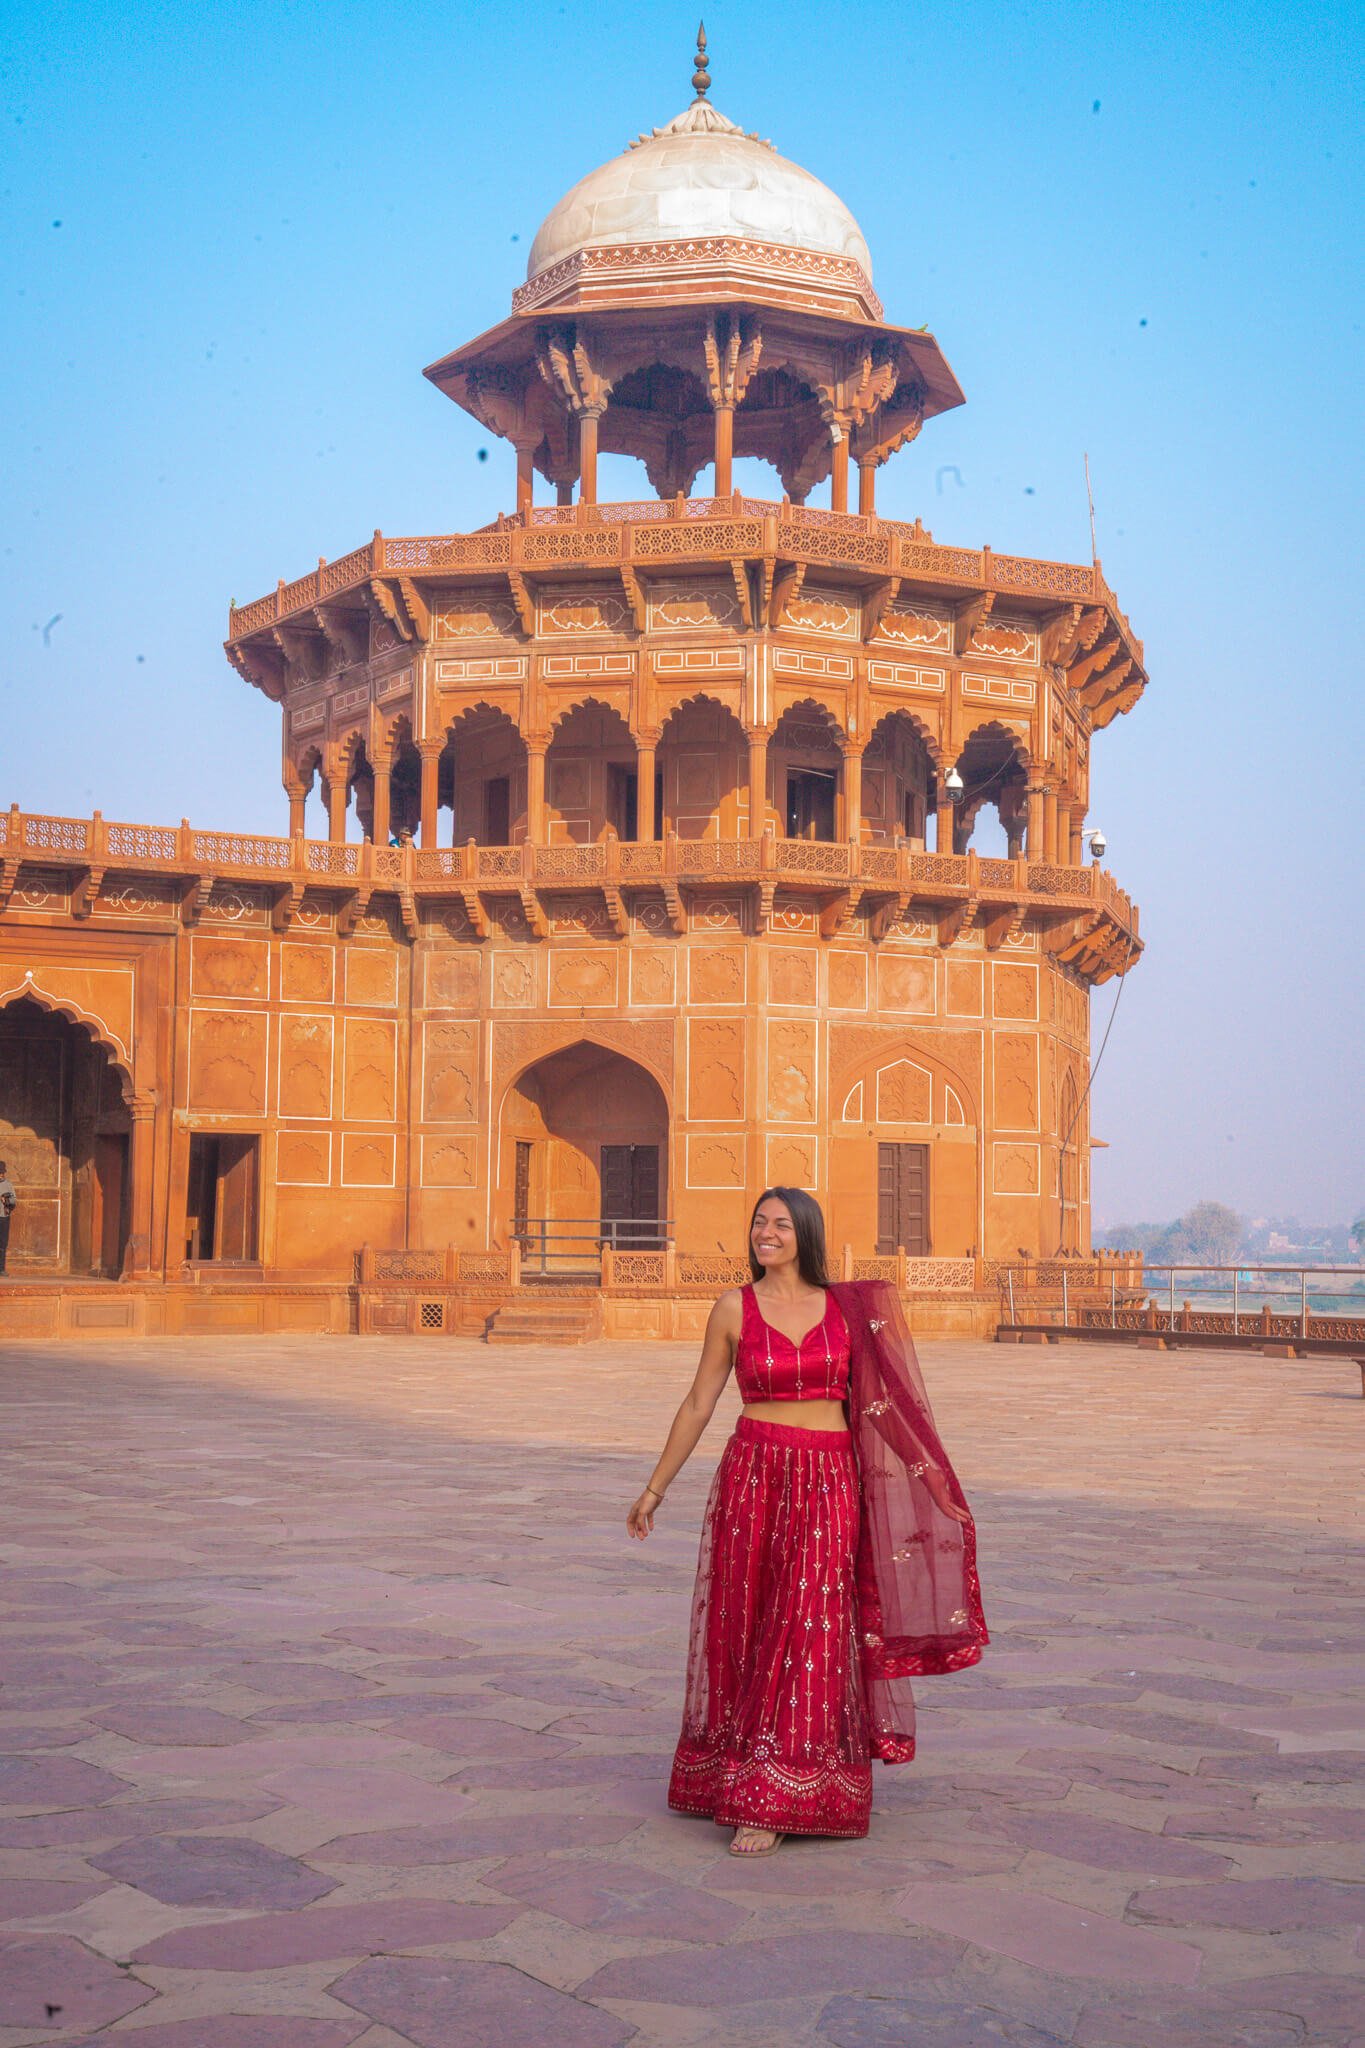 Tower at the Taj Mahal